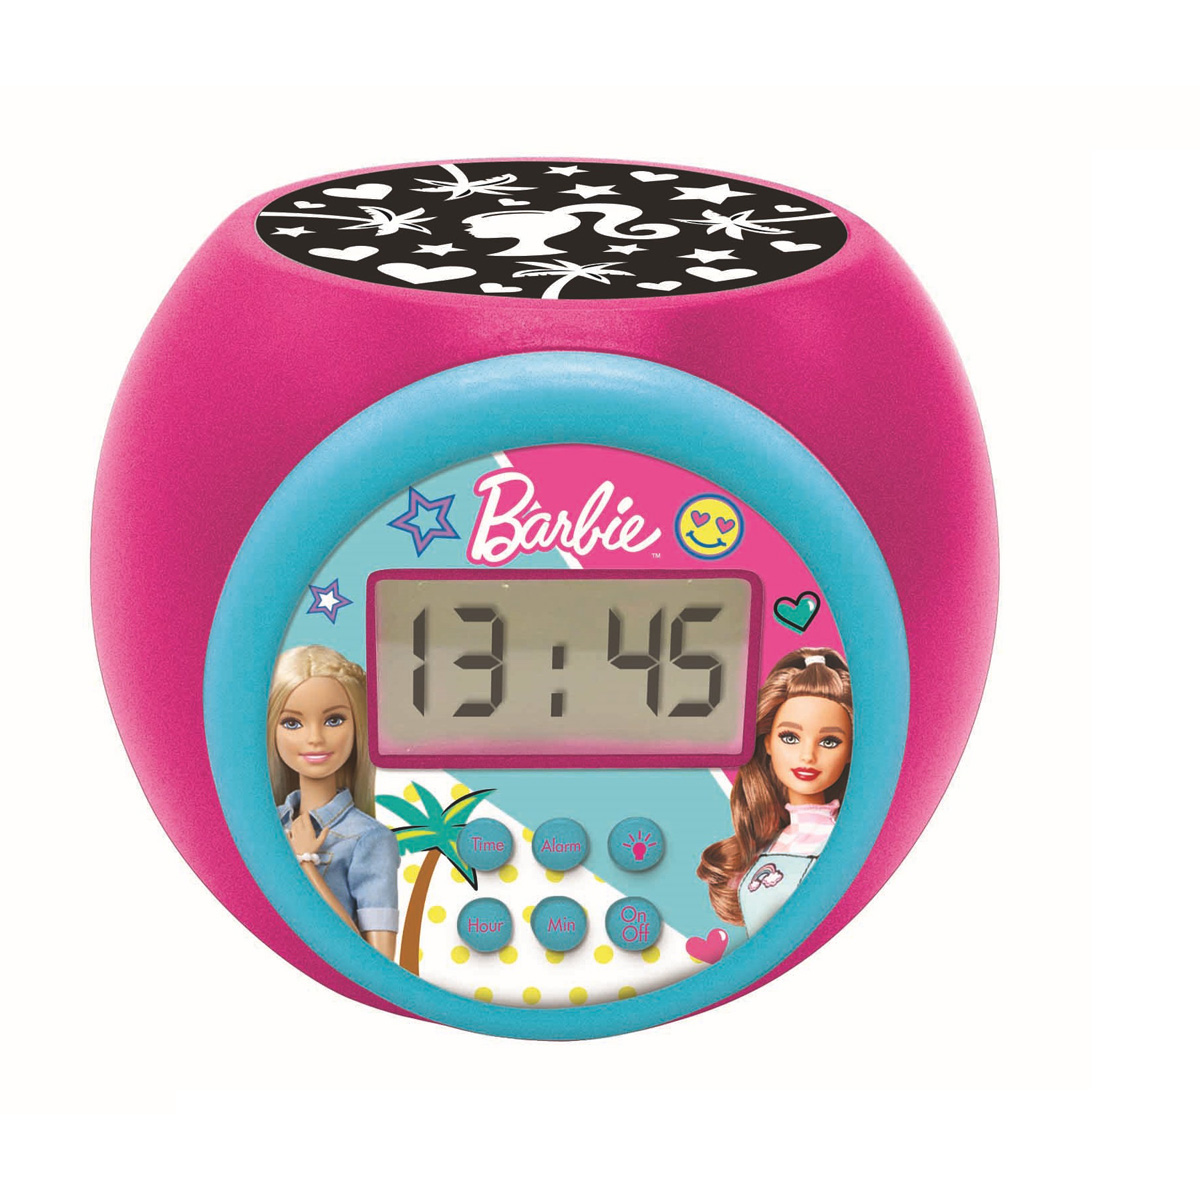 LEXIBOOK Barbie Projektionswecker